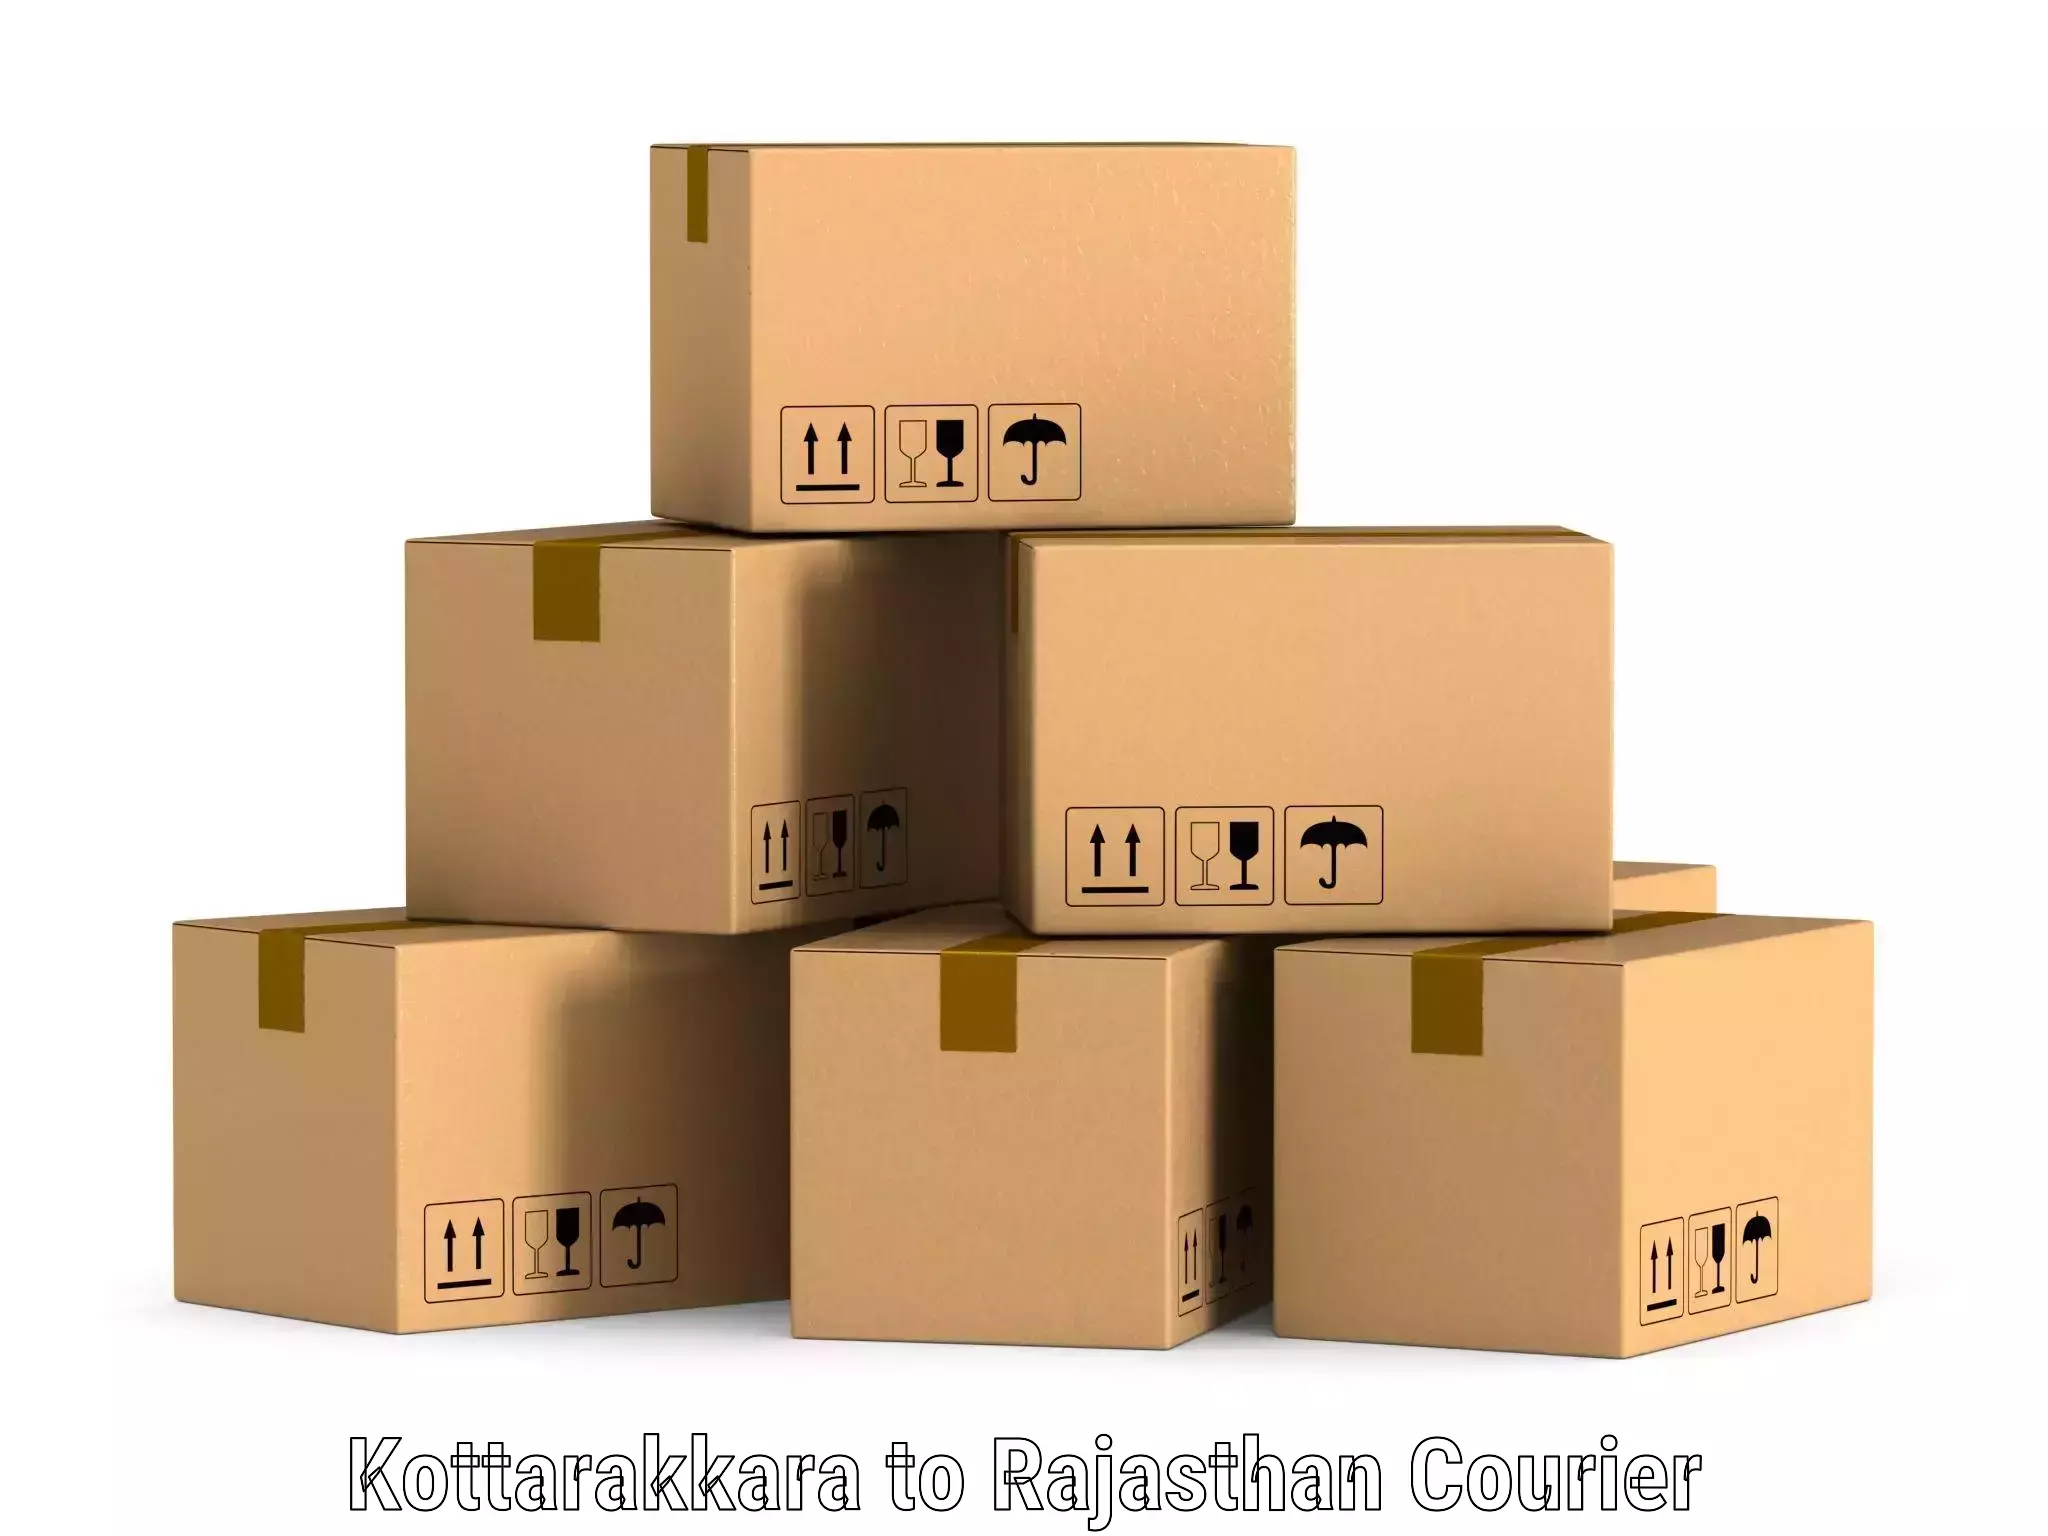 Supply chain delivery Kottarakkara to Rajasthan